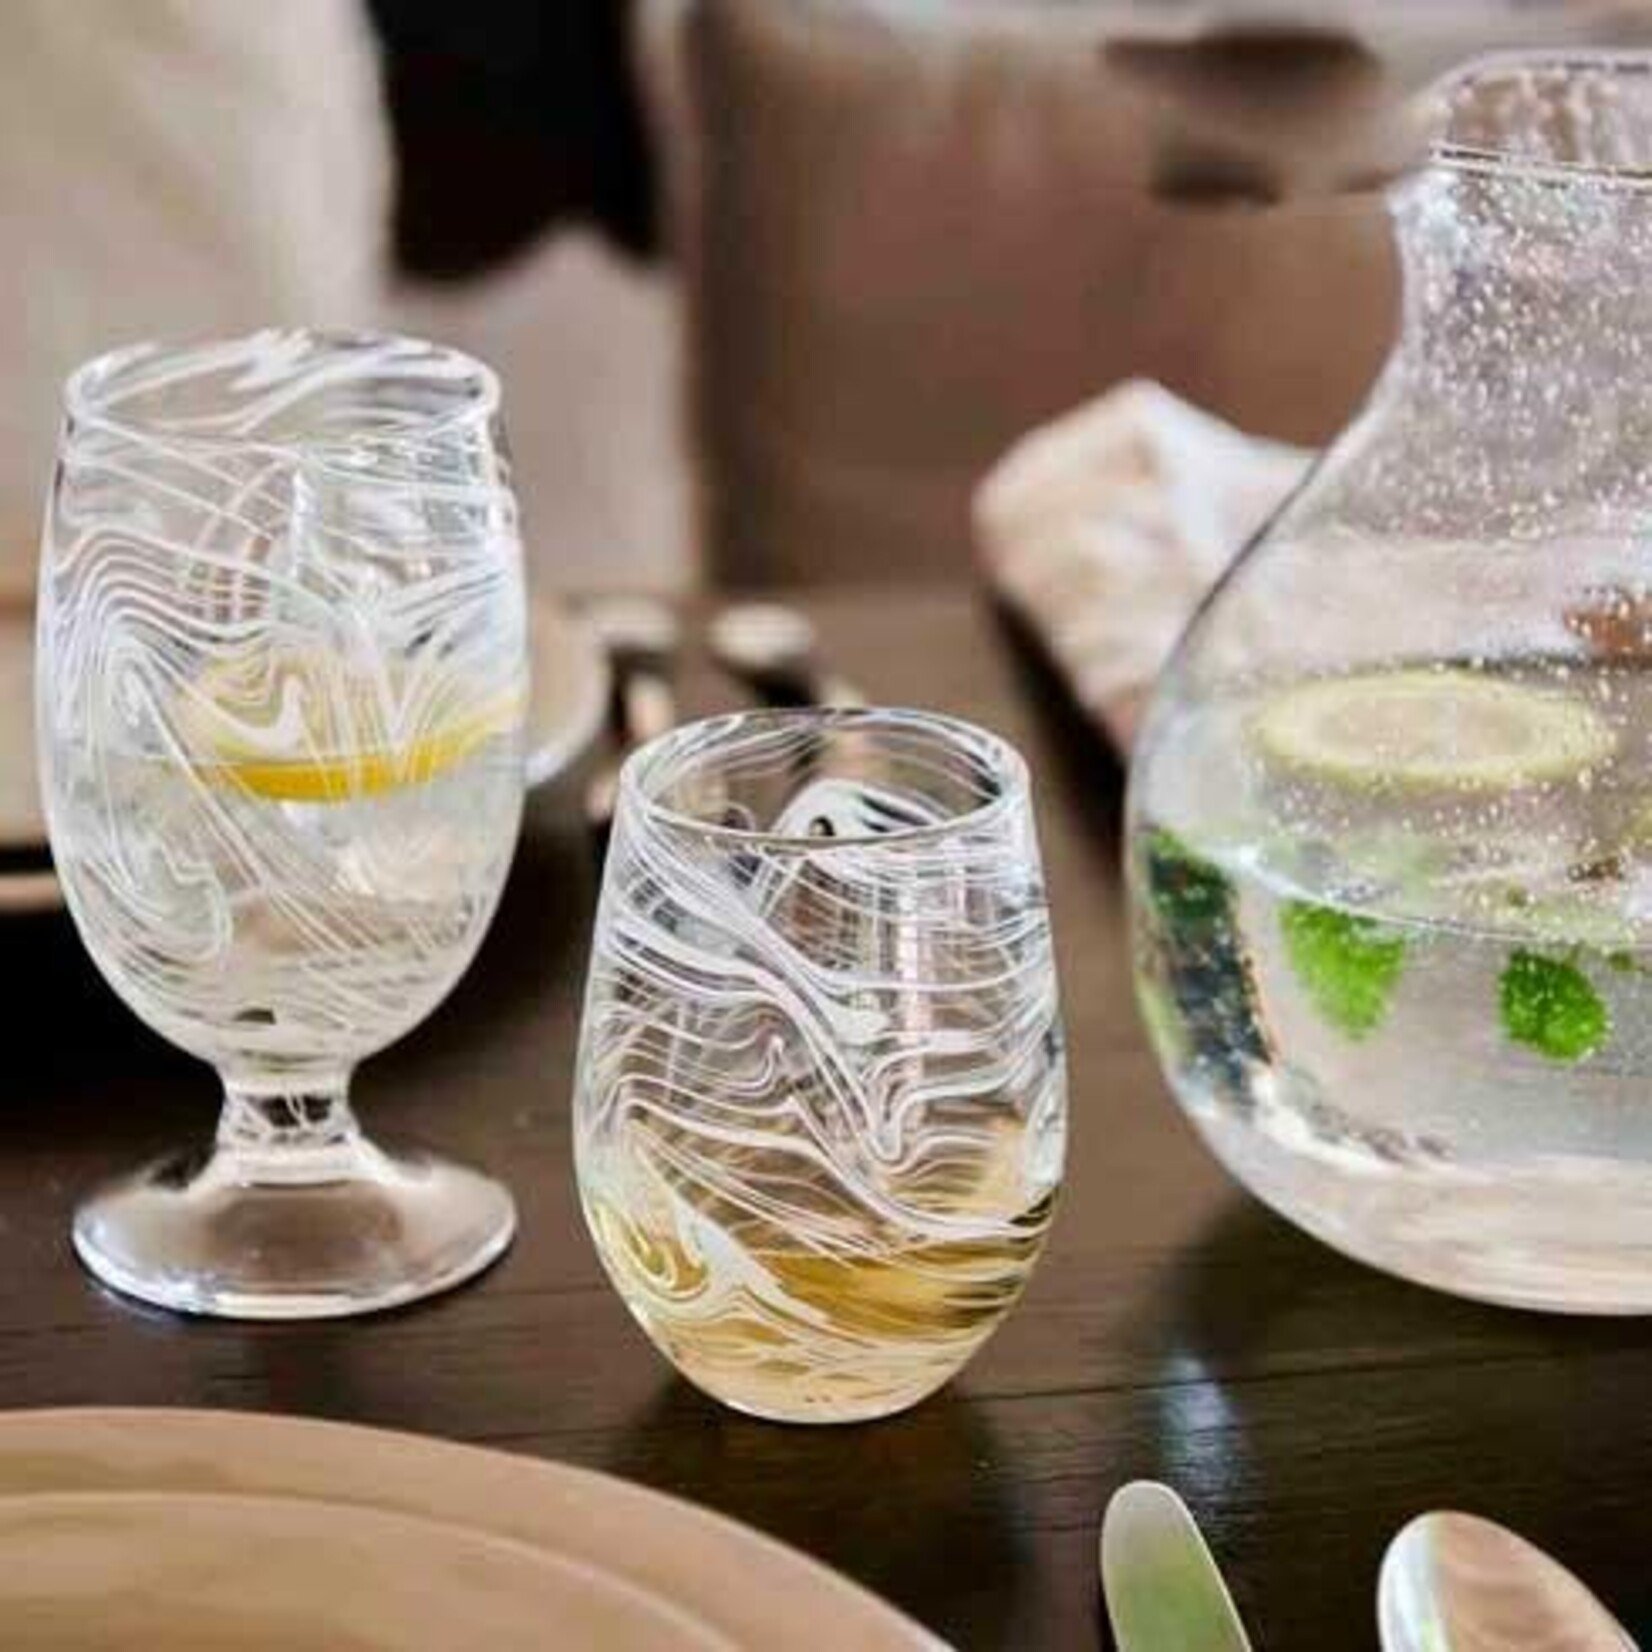 Juliska Puro Marbled Stemless Wine Glass - White